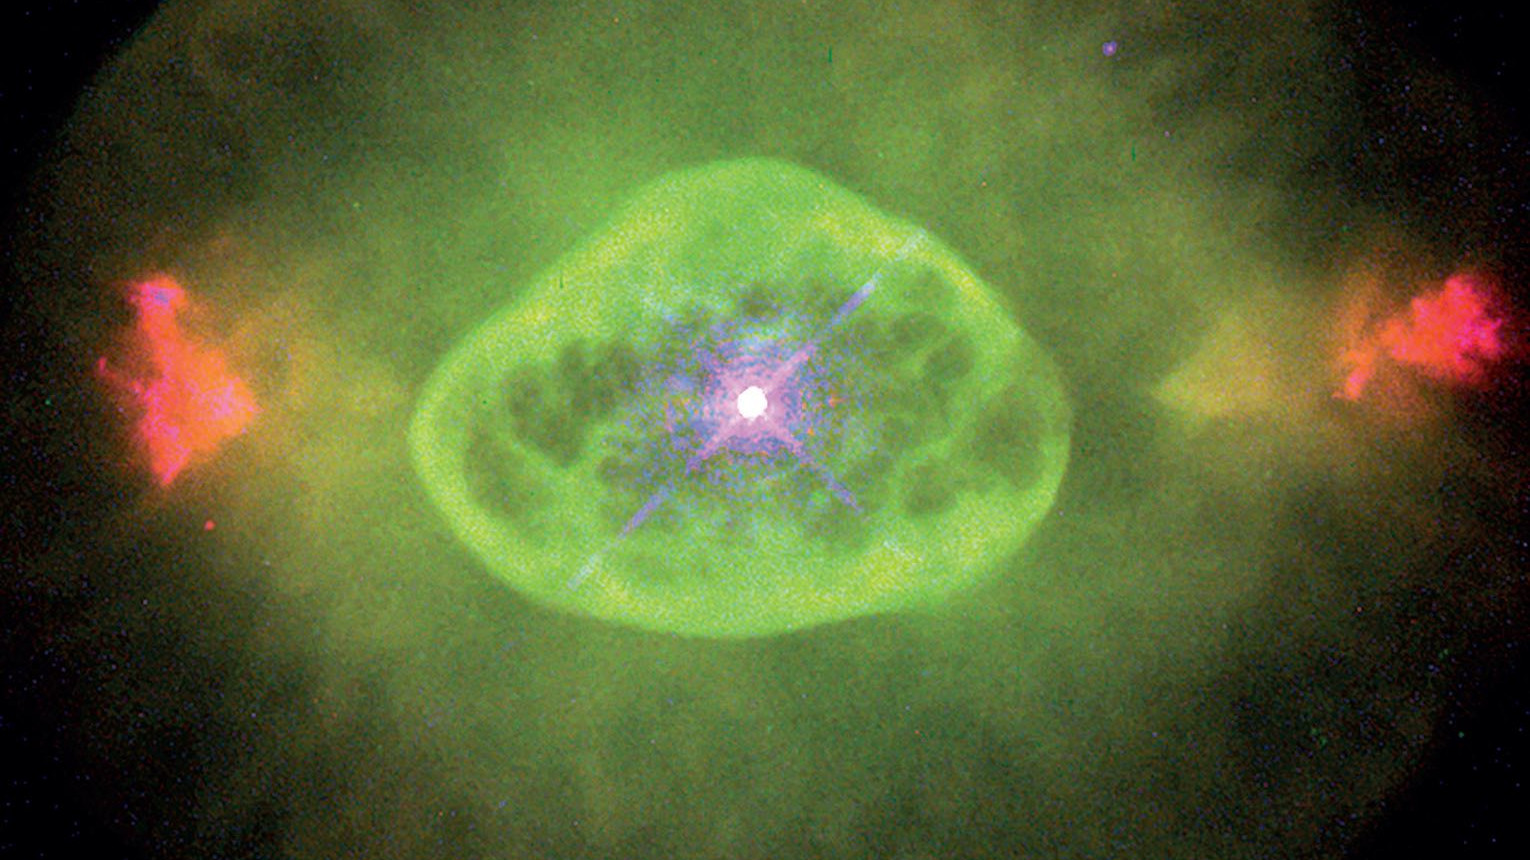 La nebulosa planetaria lampeggiante NGC 6826, vista dal telescopio Hubble. B. Balick (University of Washington), J. Alexander (University of Washington), A. Hajian (U.S. Naval Observatory), Y. Terzian (Cornell University). M. Perinotto (Universität Florenz), P. Patriarchi (Arcetri-Observatiorium) e NASA/ESA